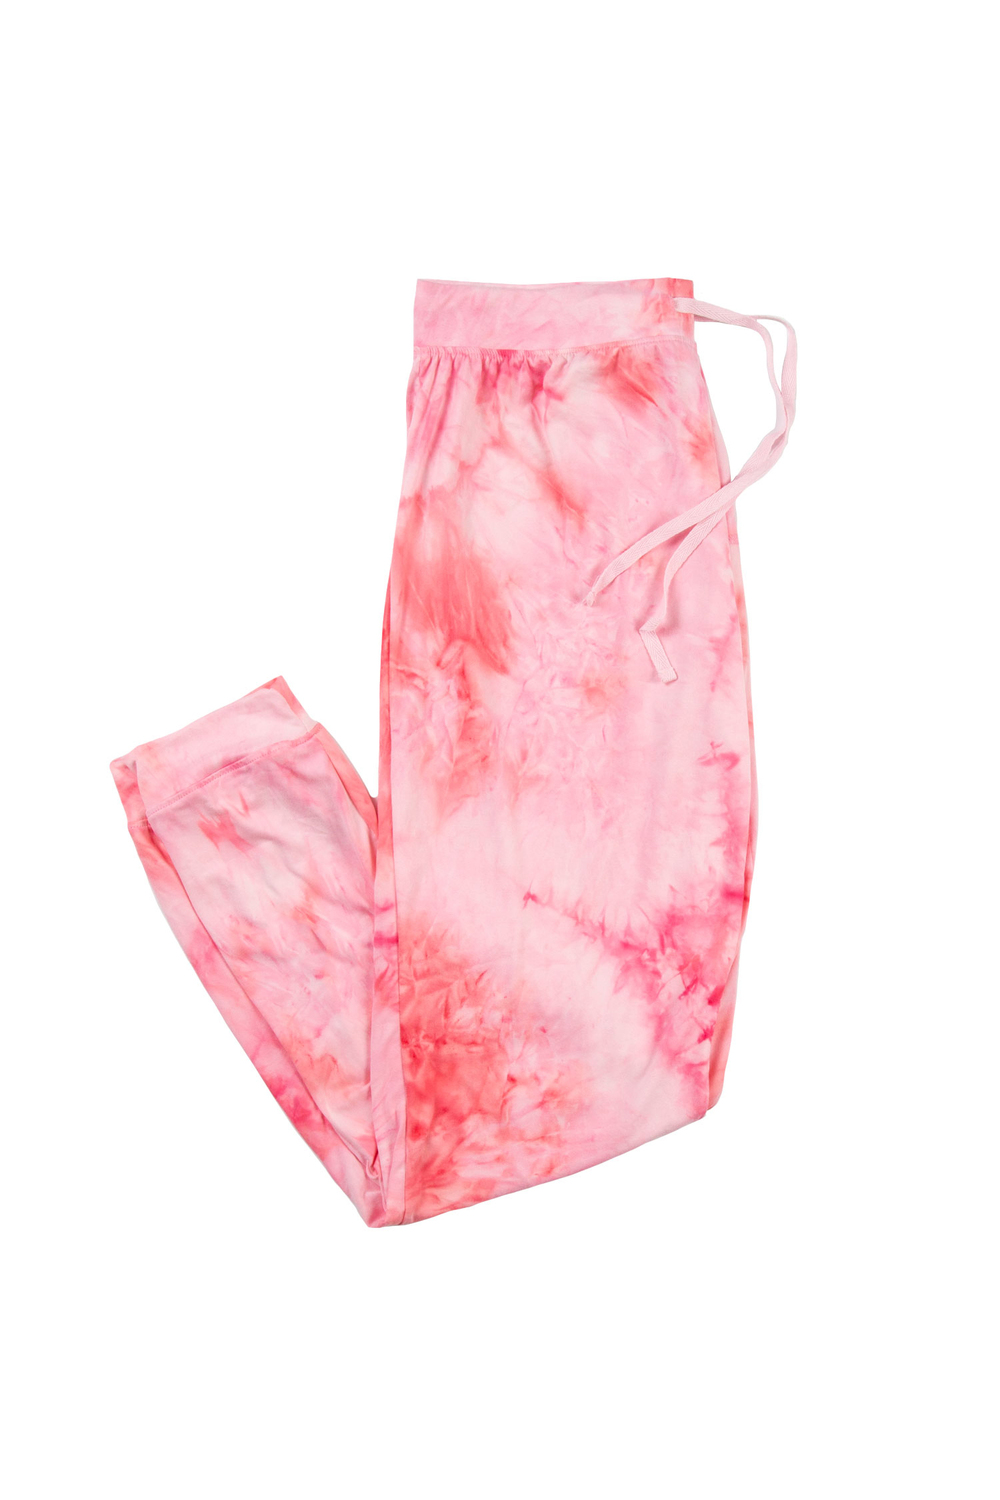 Stretch knit jogger style pajama pants, pink tie-dye, medium (M)